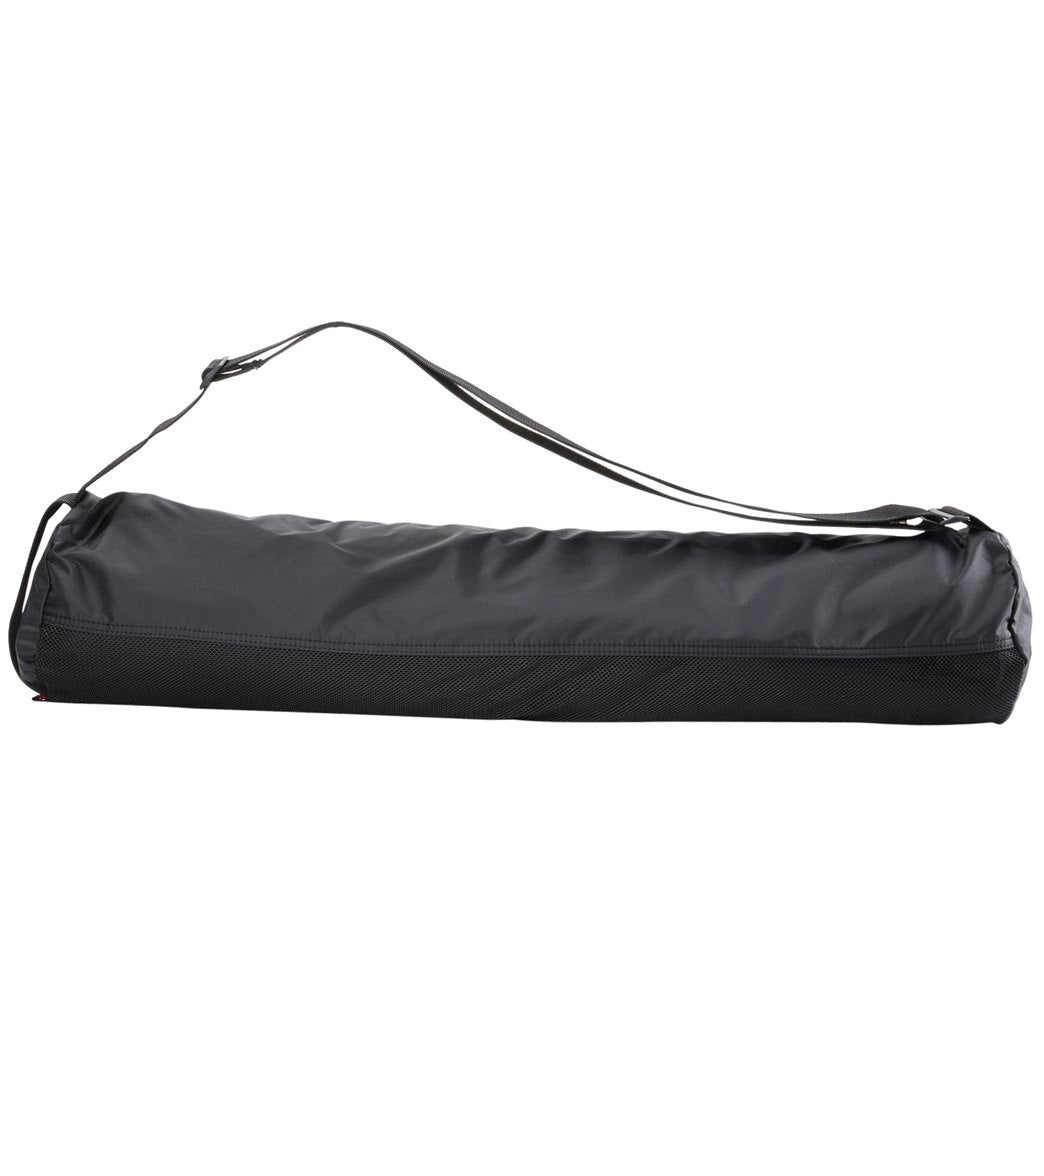 Breathe Easy Yoga Bag - Black / One Size